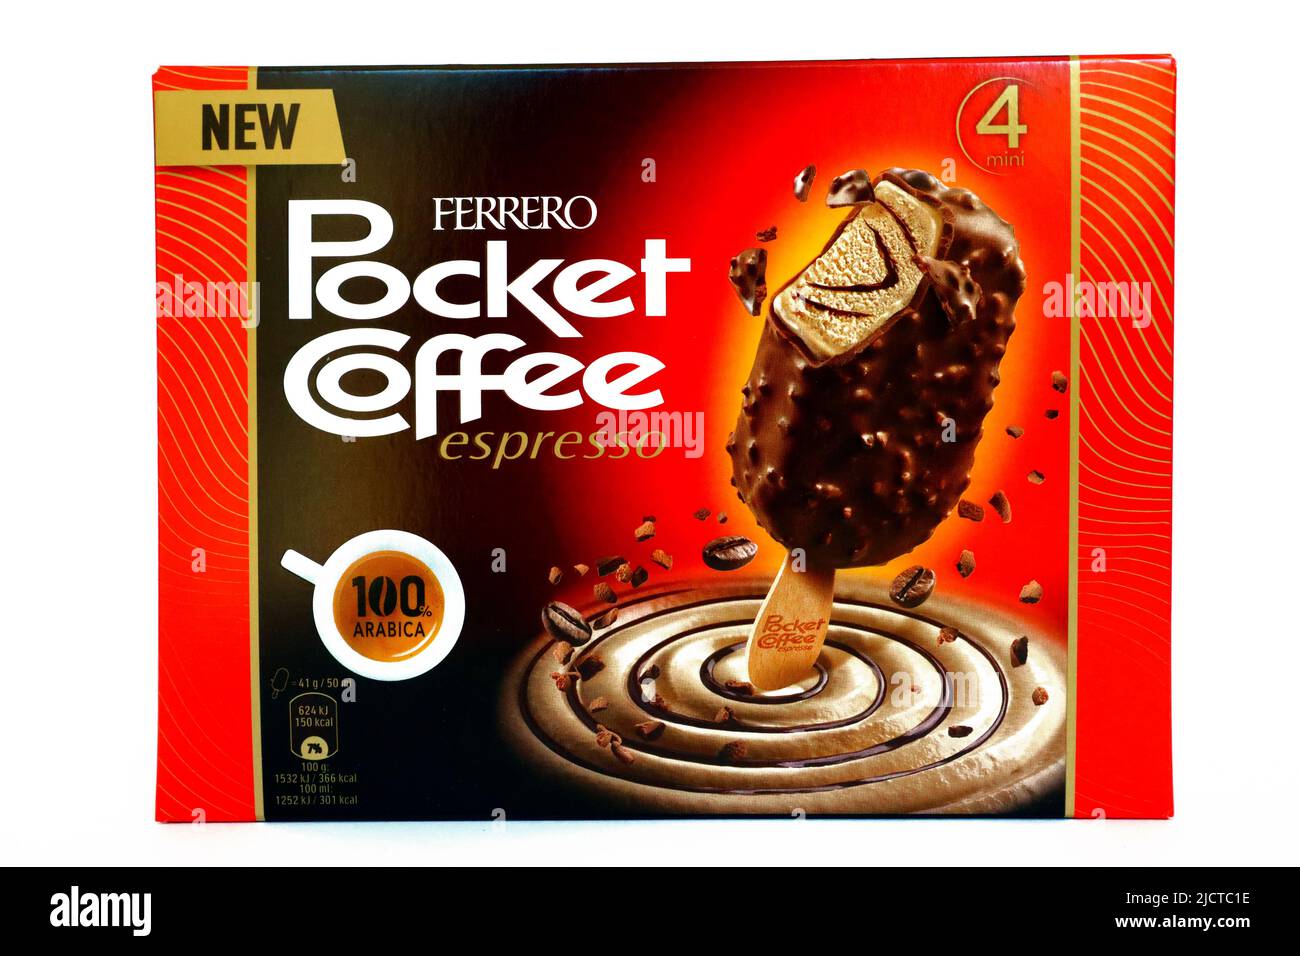 Pocket Coffee Ferrero Chocolates Editorial Photo - Image of